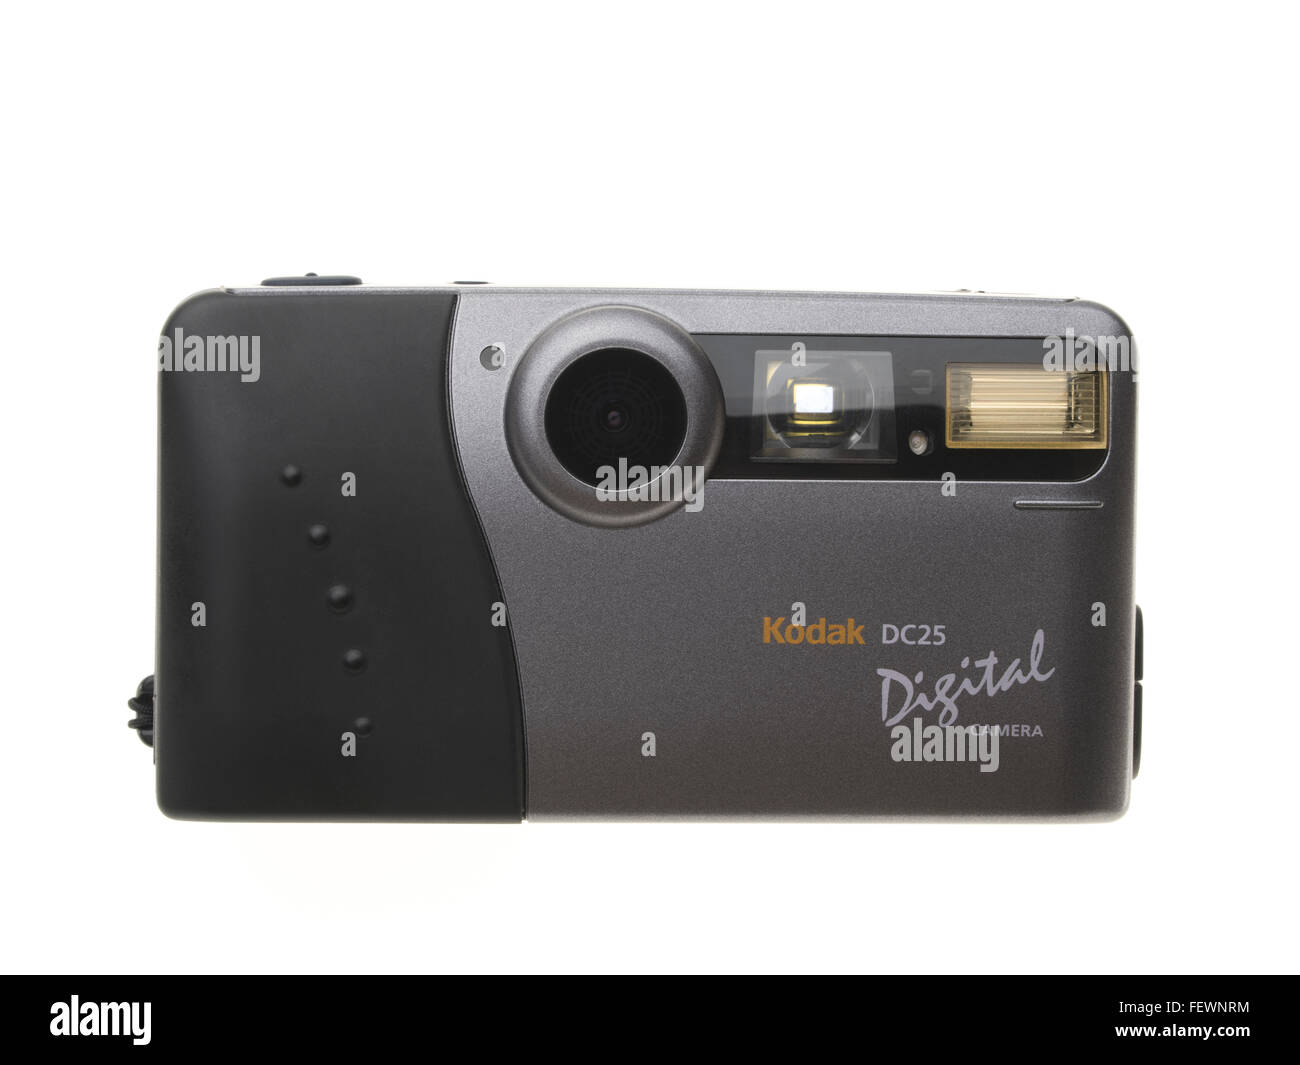 Kodak DC25 digital camera one of the world's first mass consumer digital camera, released in 1996 0.2 megapixel sensor Stock Photo